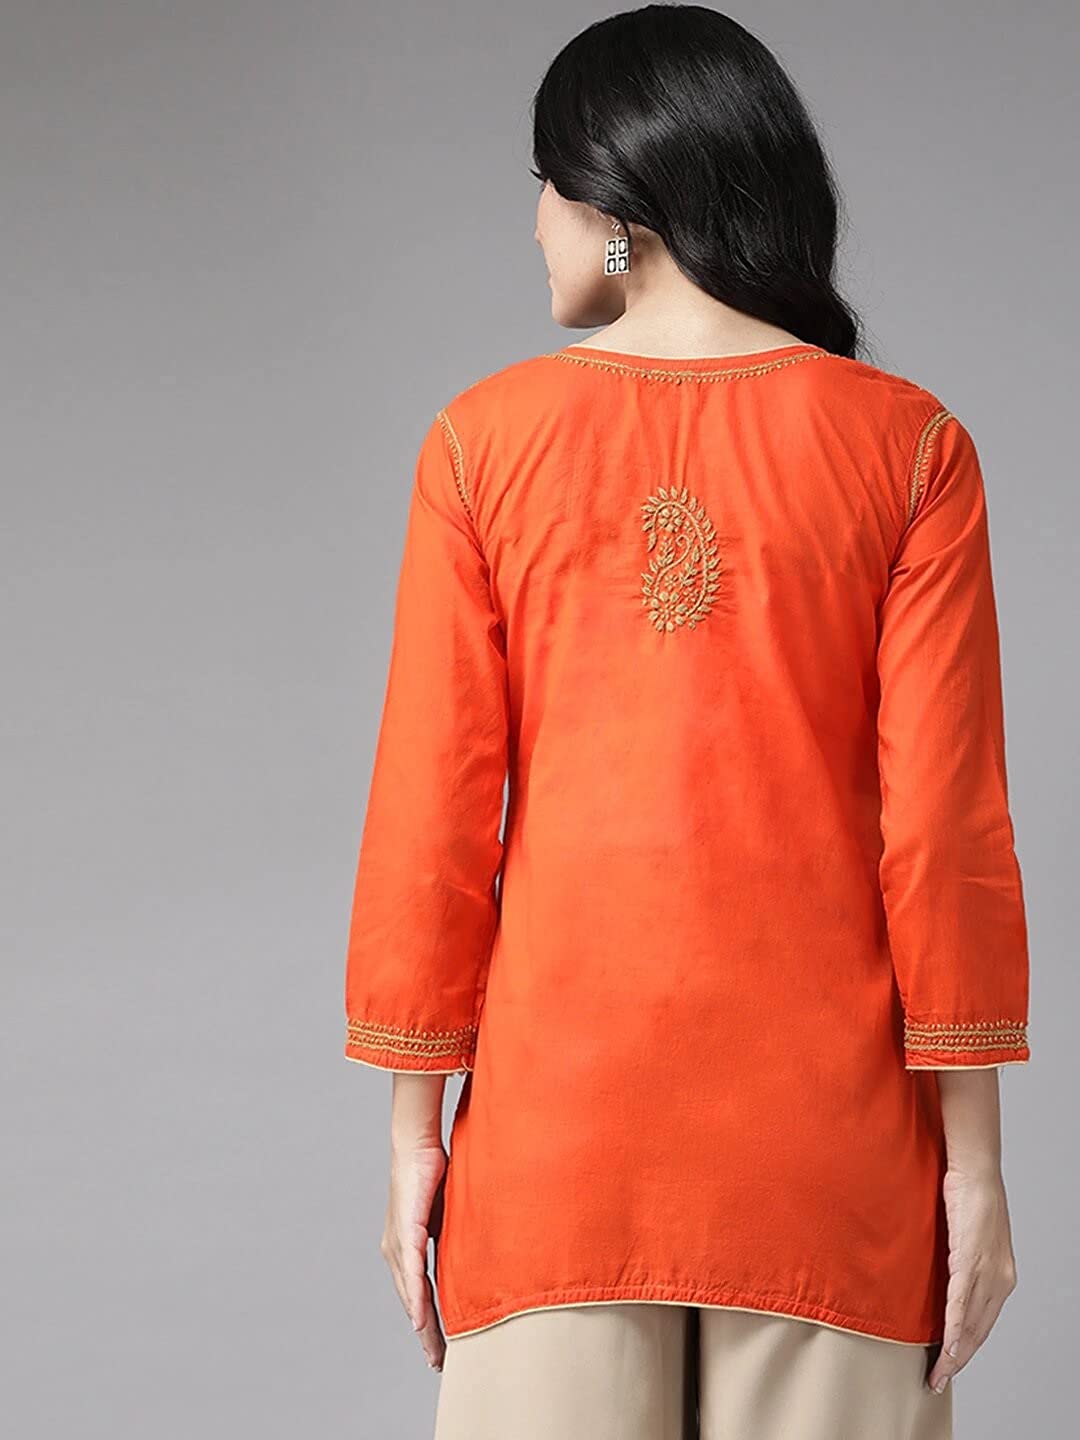 Ada Hand Embroidered Lucknow Chikankari Straight Cotton Short Kurti Tunic Top for Women A250295 -  Kurtas & Kurtis in Sri Lanka from Arcade Online Shopping - Just Rs. 7099!